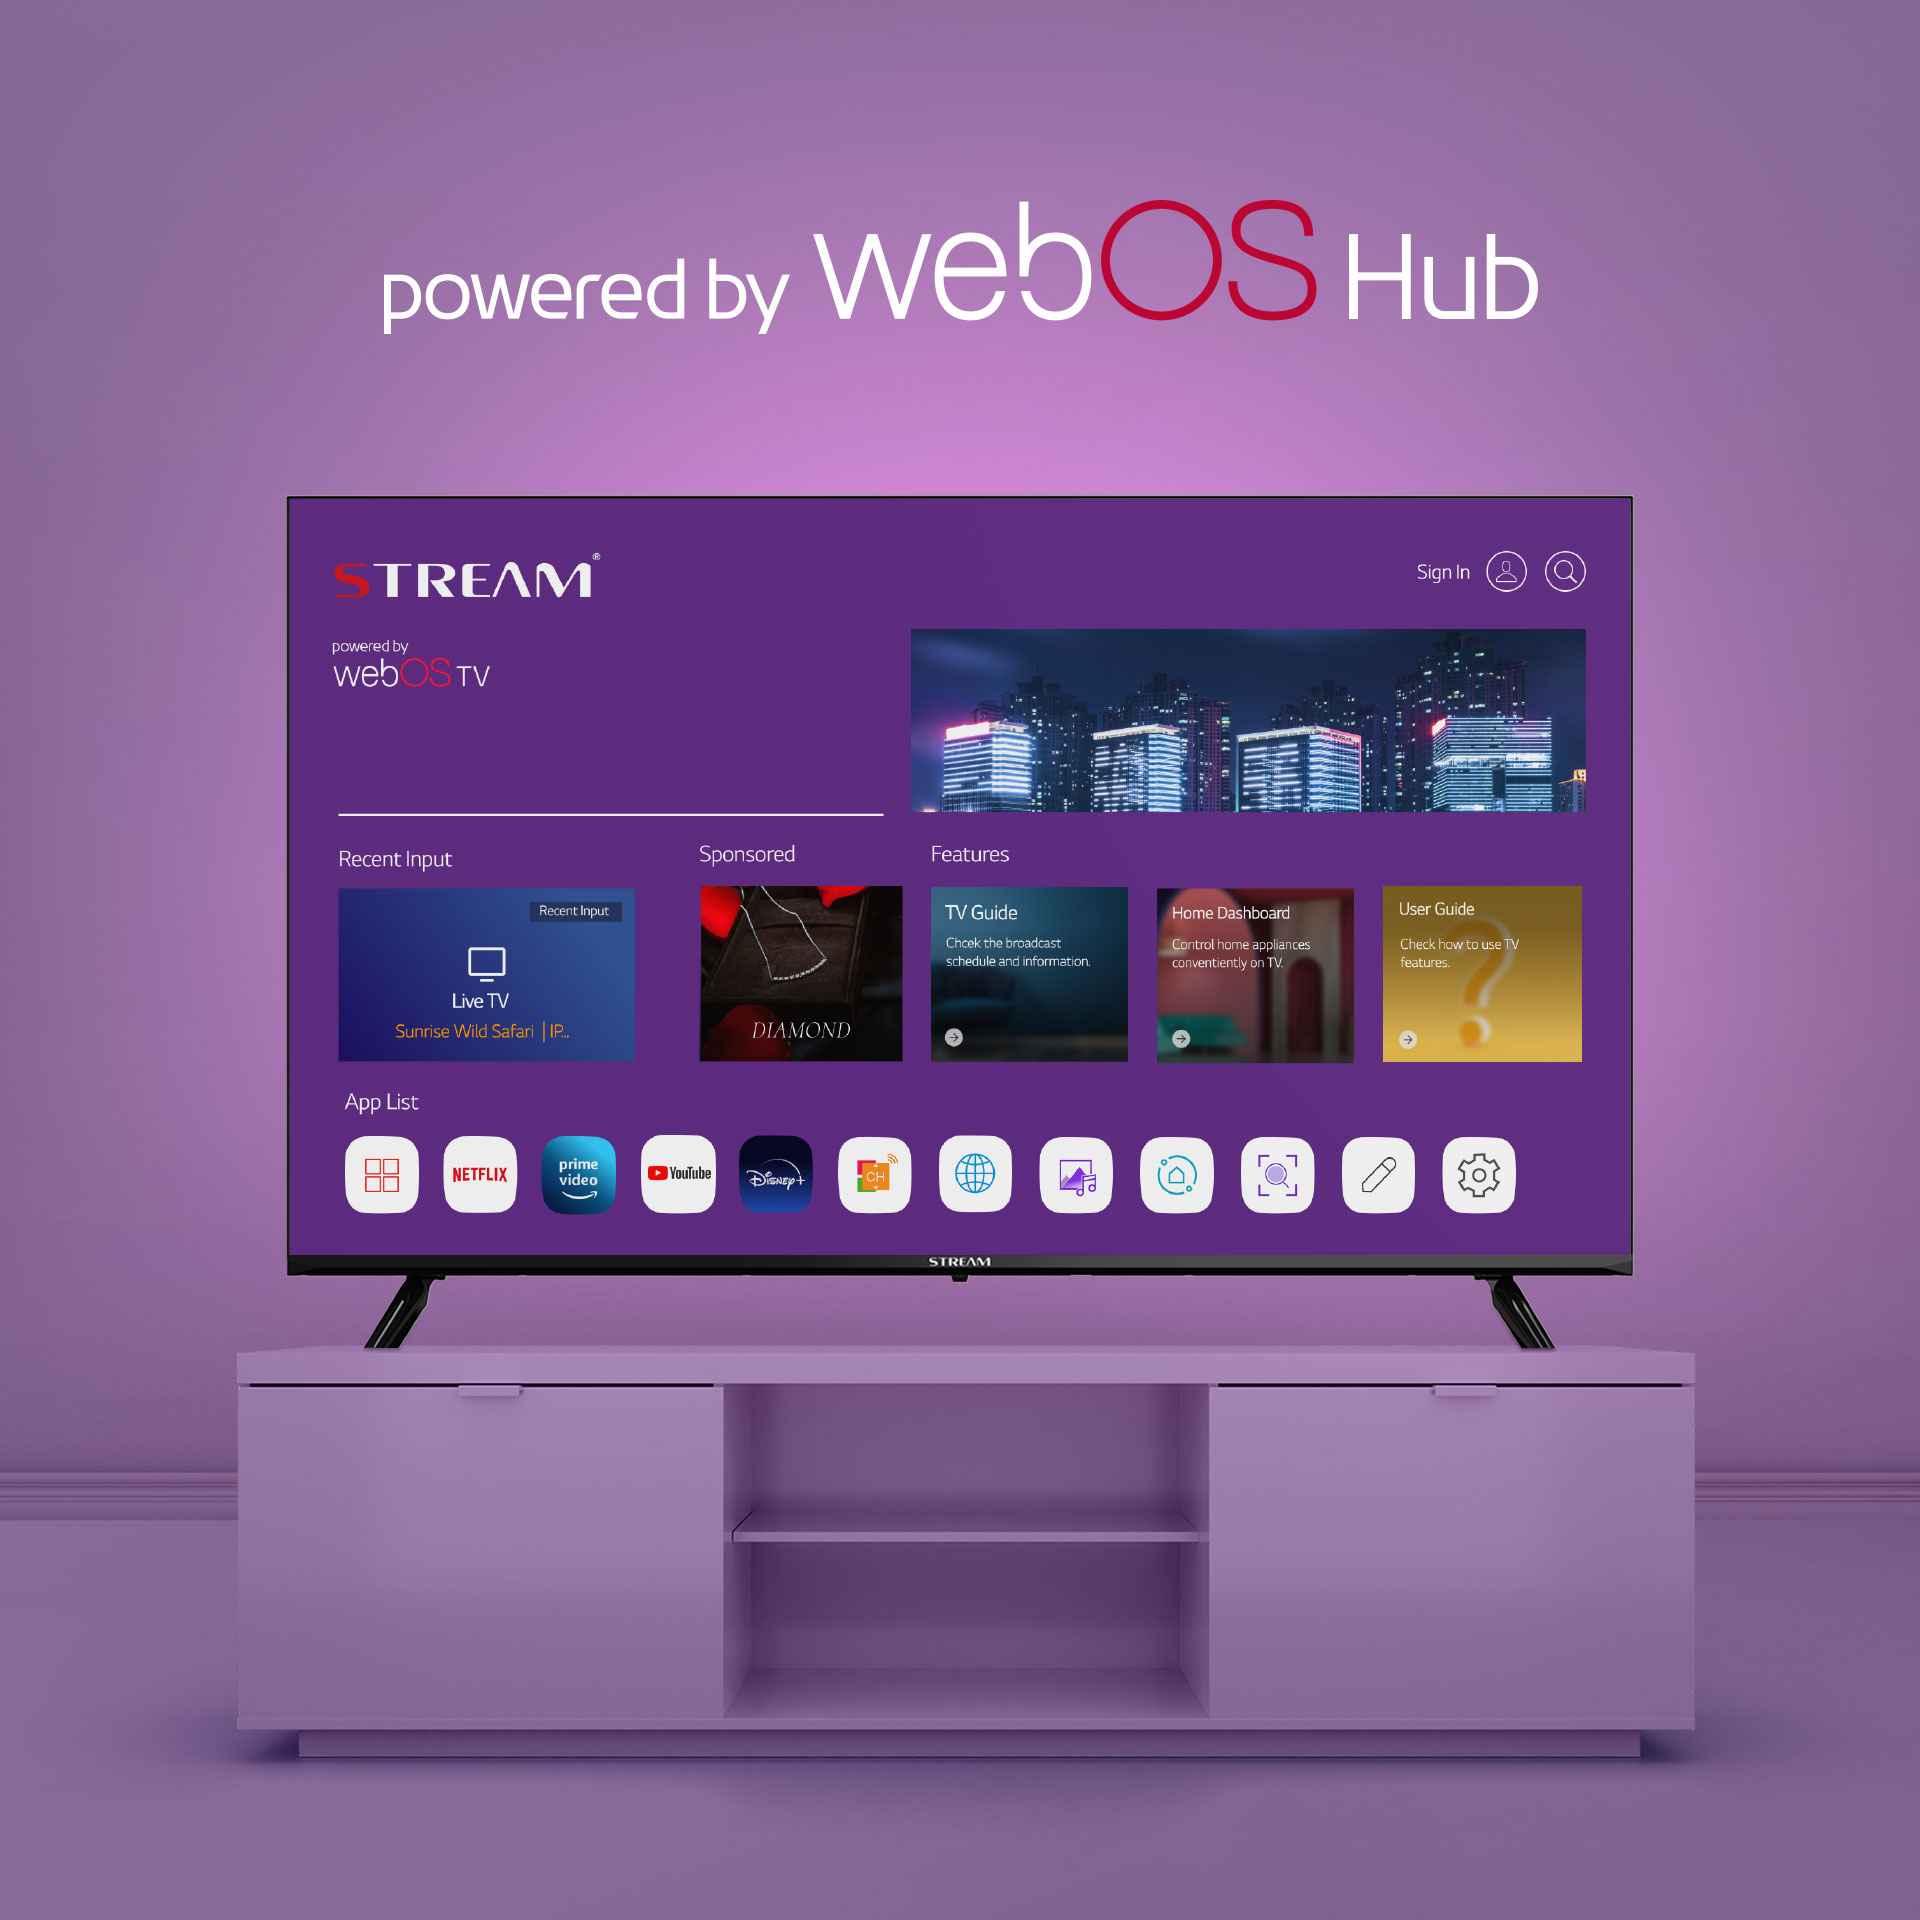 WebOS Hub